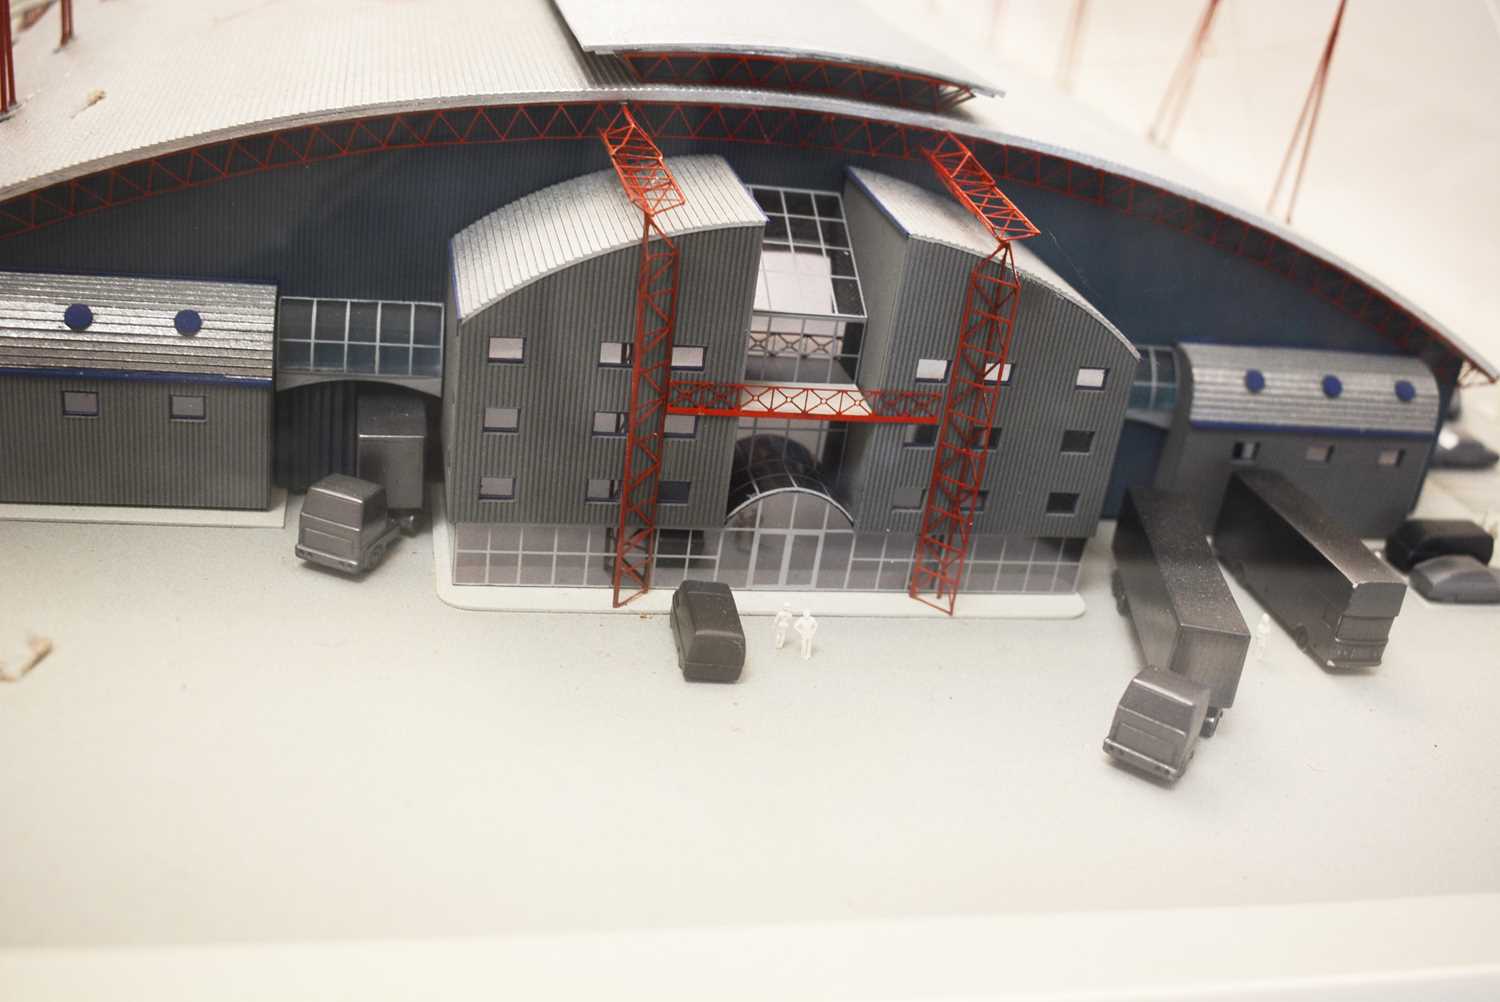 A Builder's model of The Utilita Arena Newcastle - Bild 3 aus 6